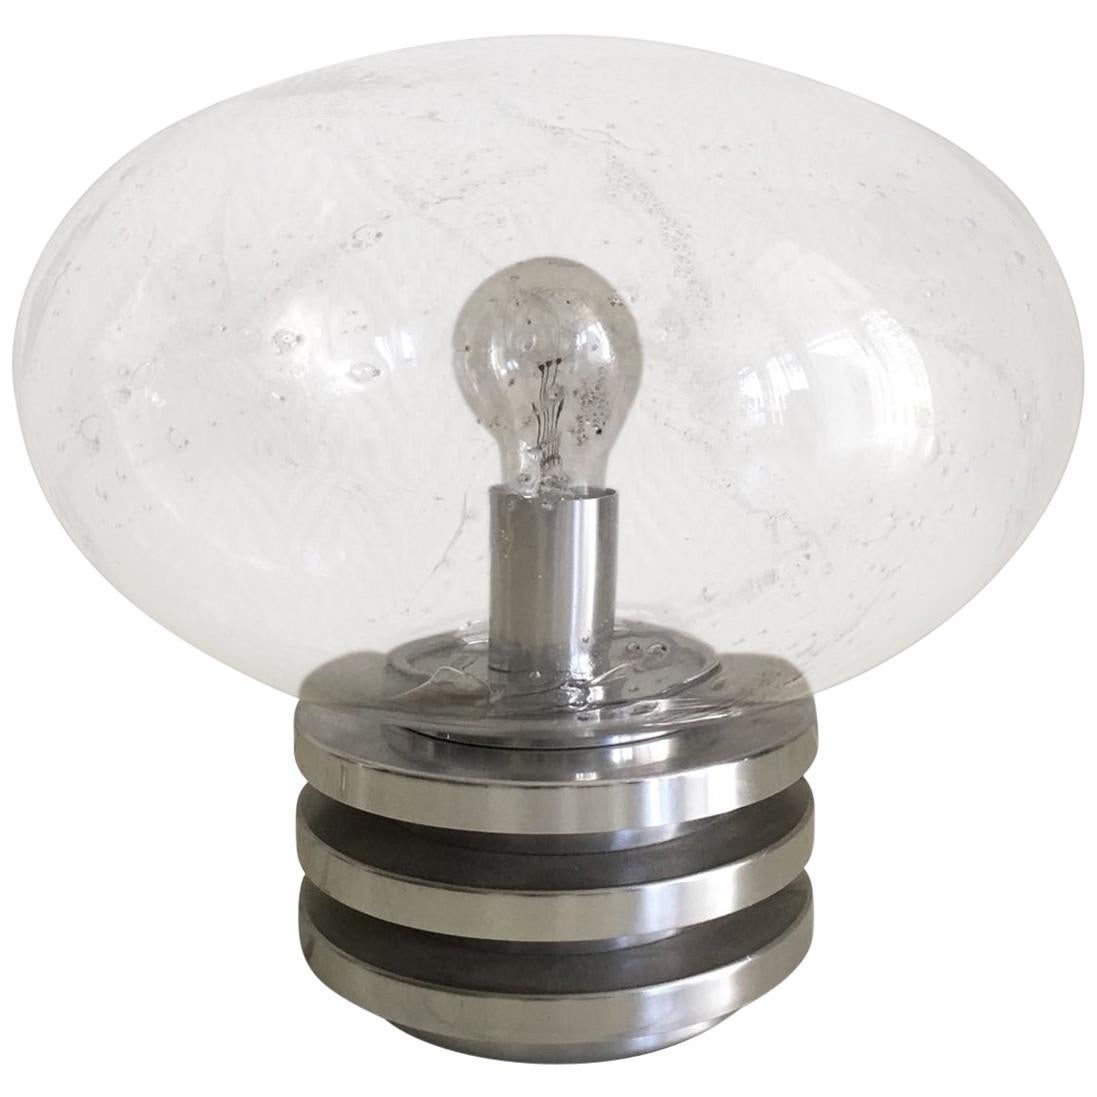 Doria Leuchten Germany Space Age Table Lamp with Handblown Bubbleglass For Sale